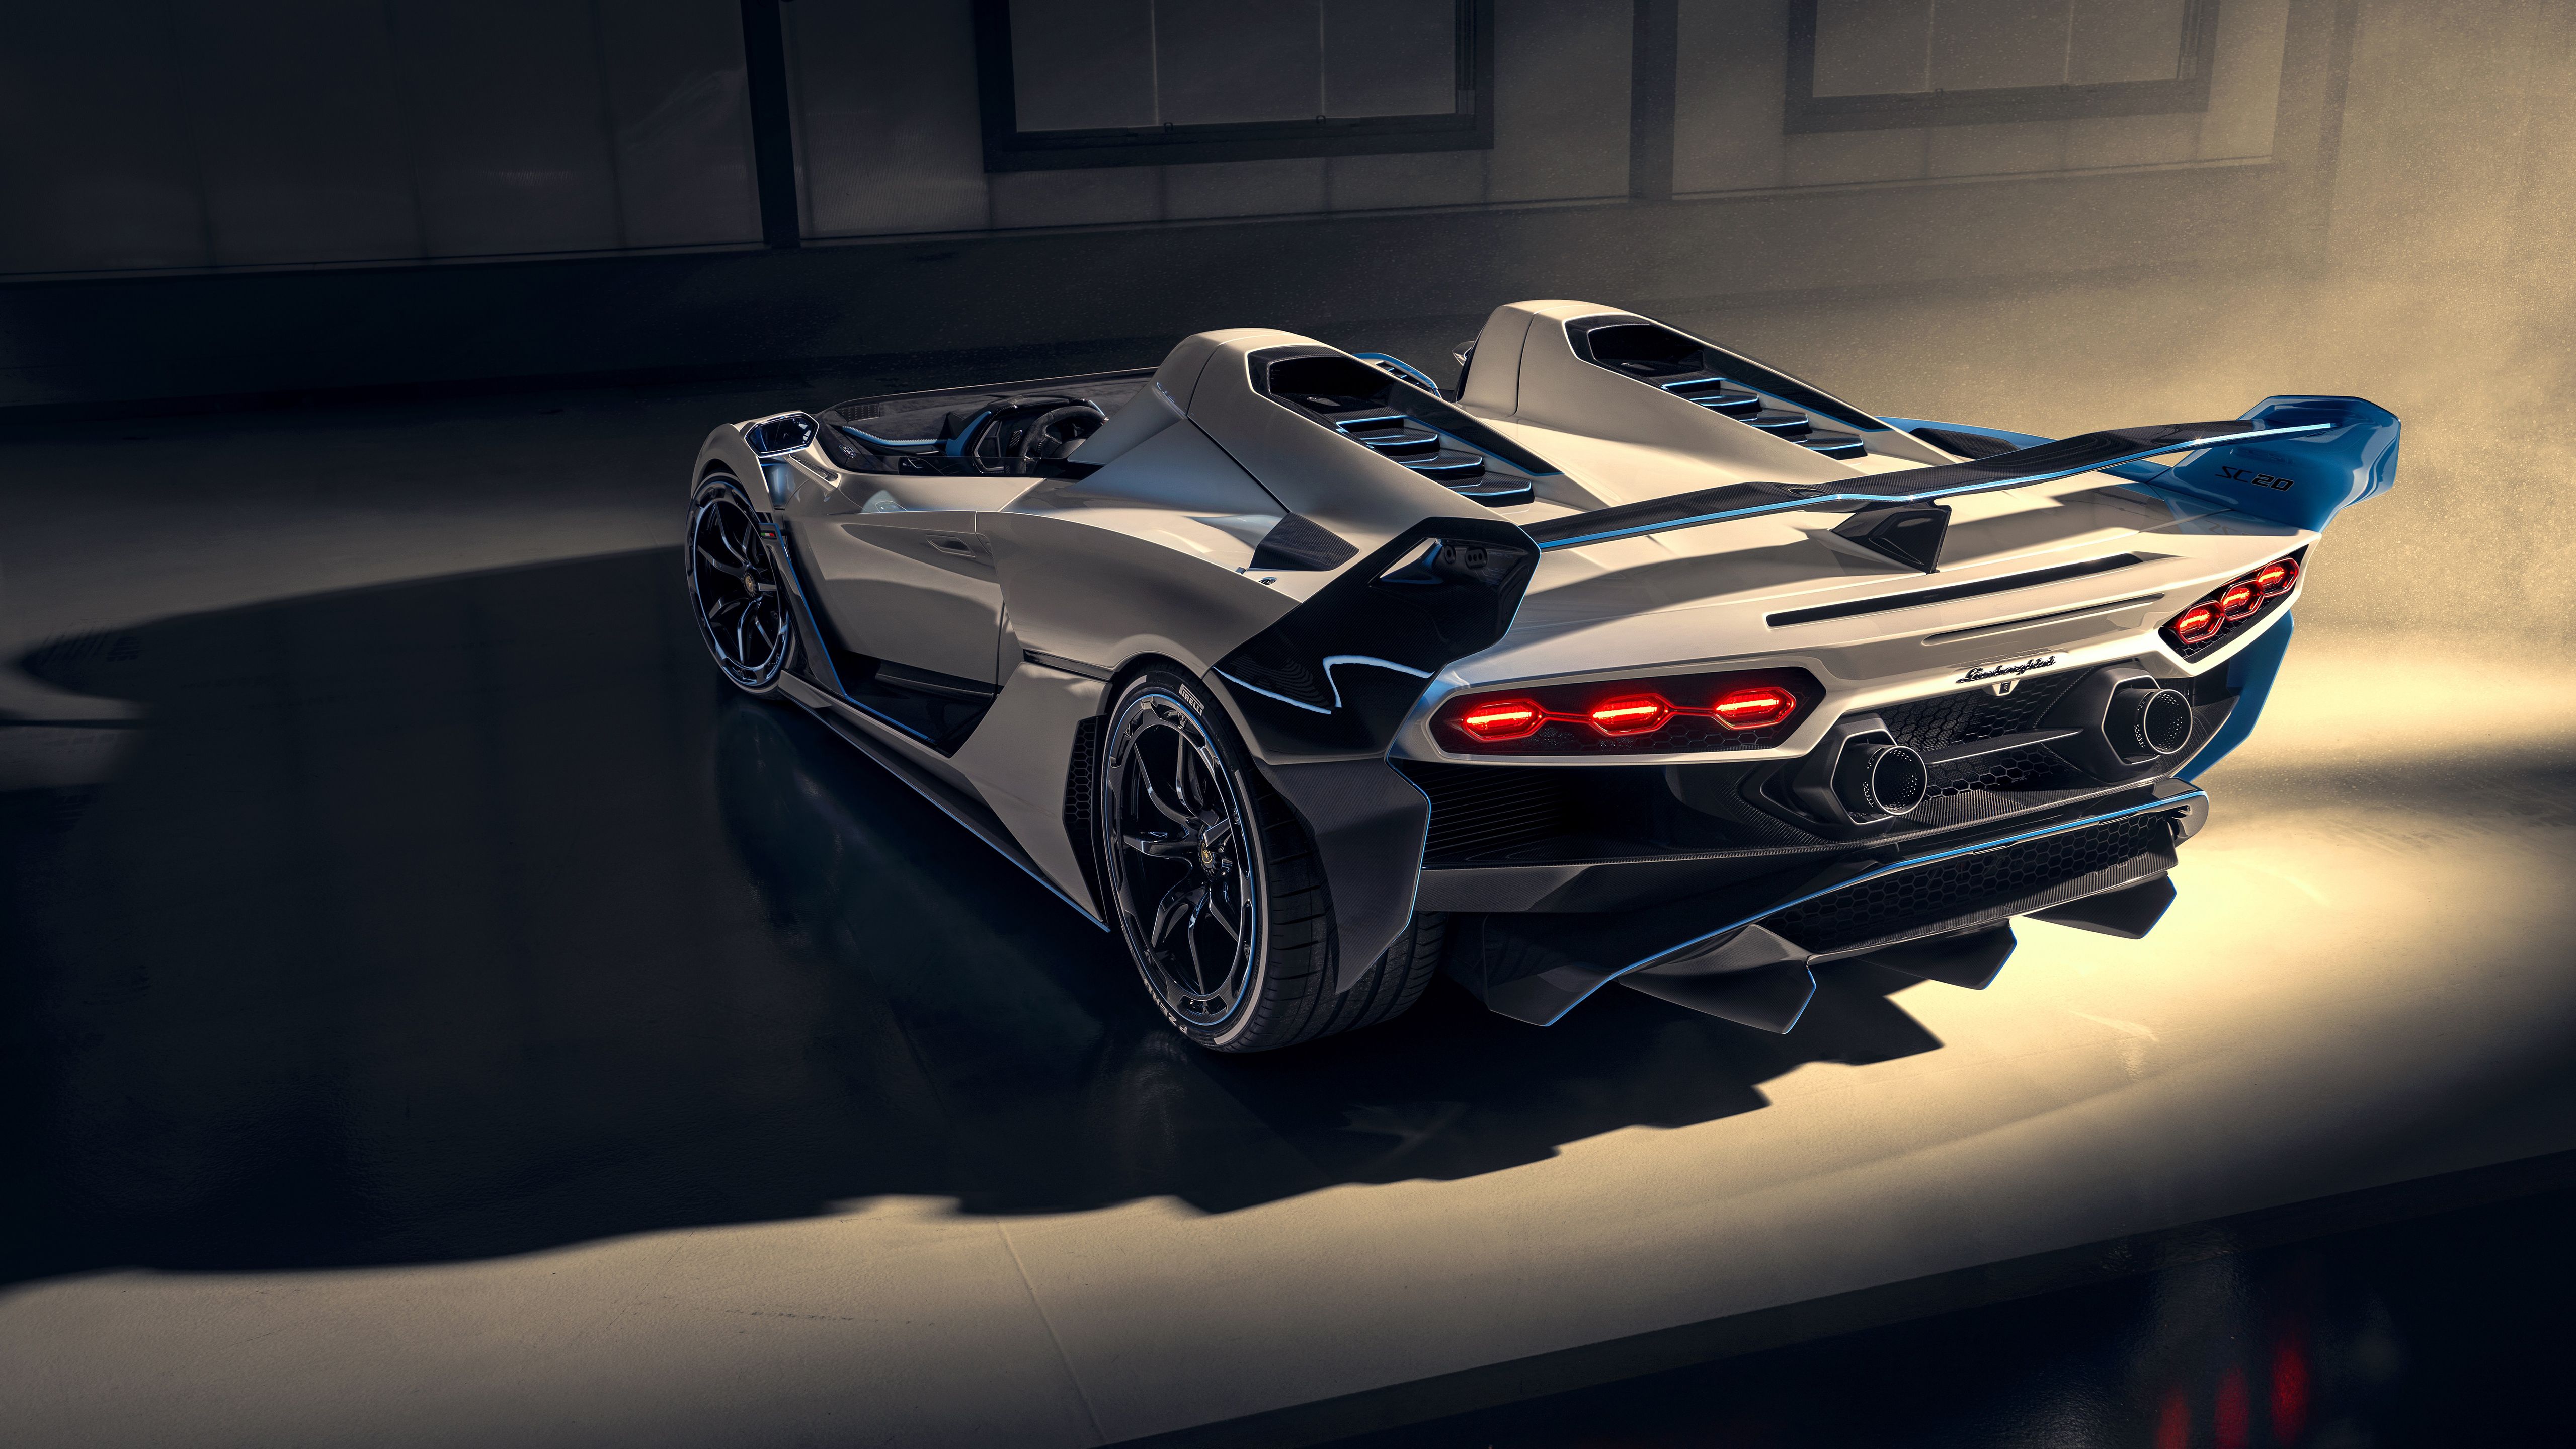 Lamborghini SC20 5k, HD Cars, 4k Wallpaper, Image, Background, Photo and Picture